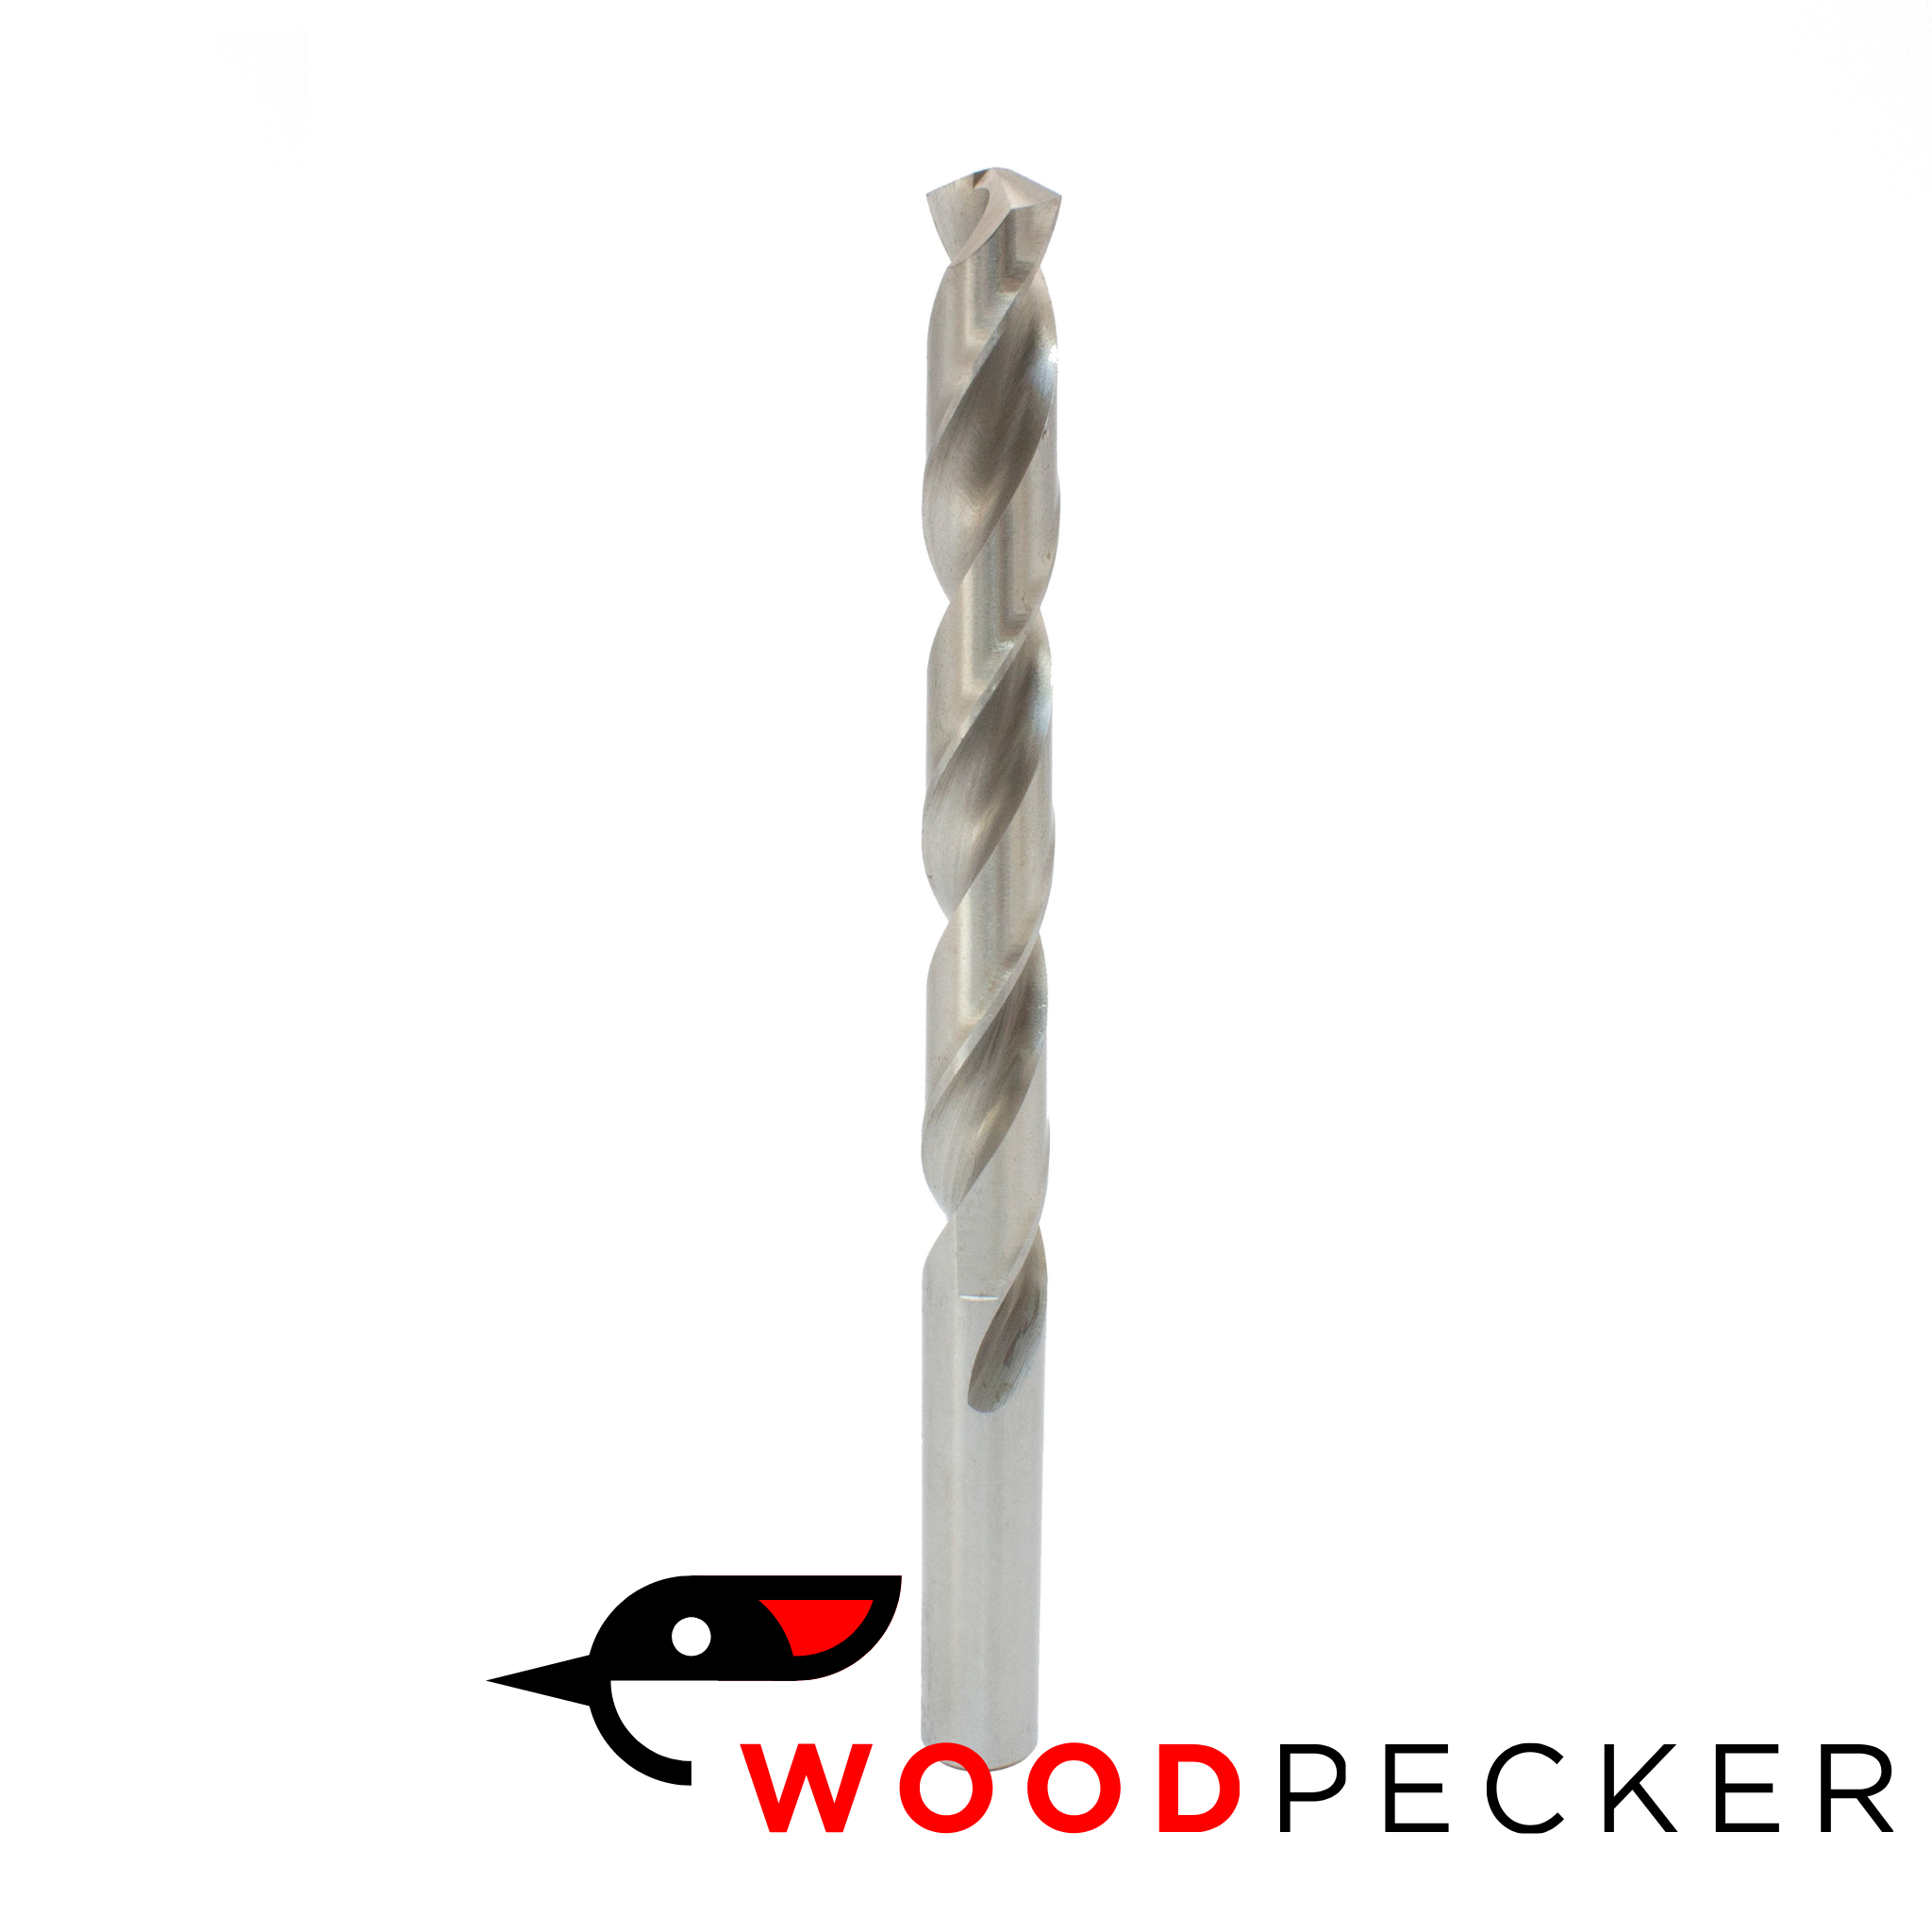 Woodpecker - Mèche à percer HSS - D: 1/16" L: 1-7/8"